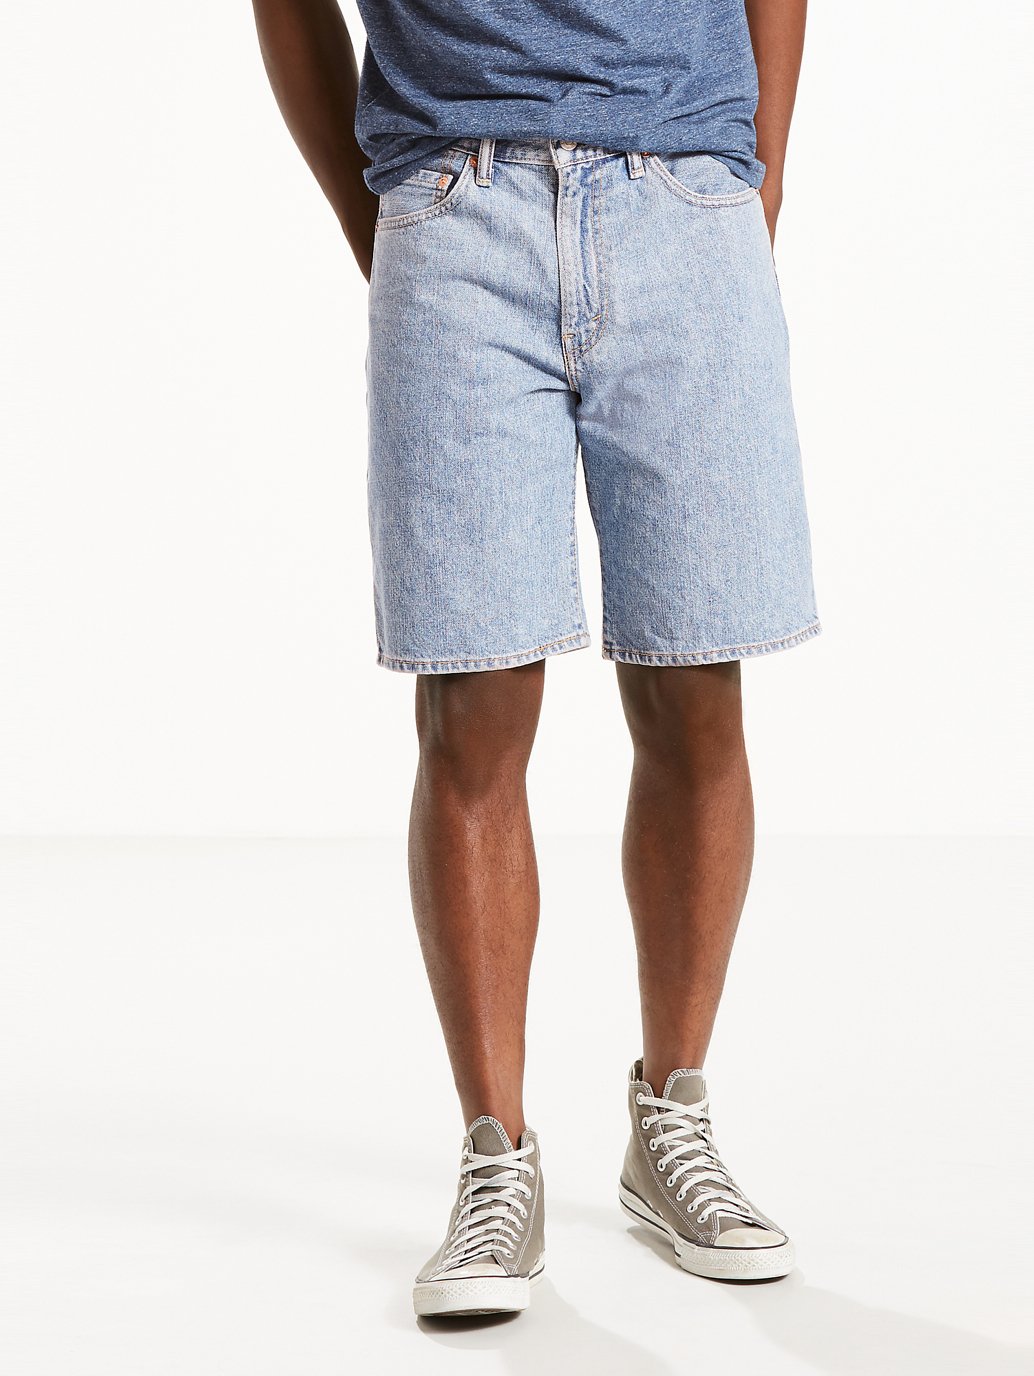 Jeans Shorts for Men: Branded Denim Shorts for Men | GAS Jeans-suu.vn